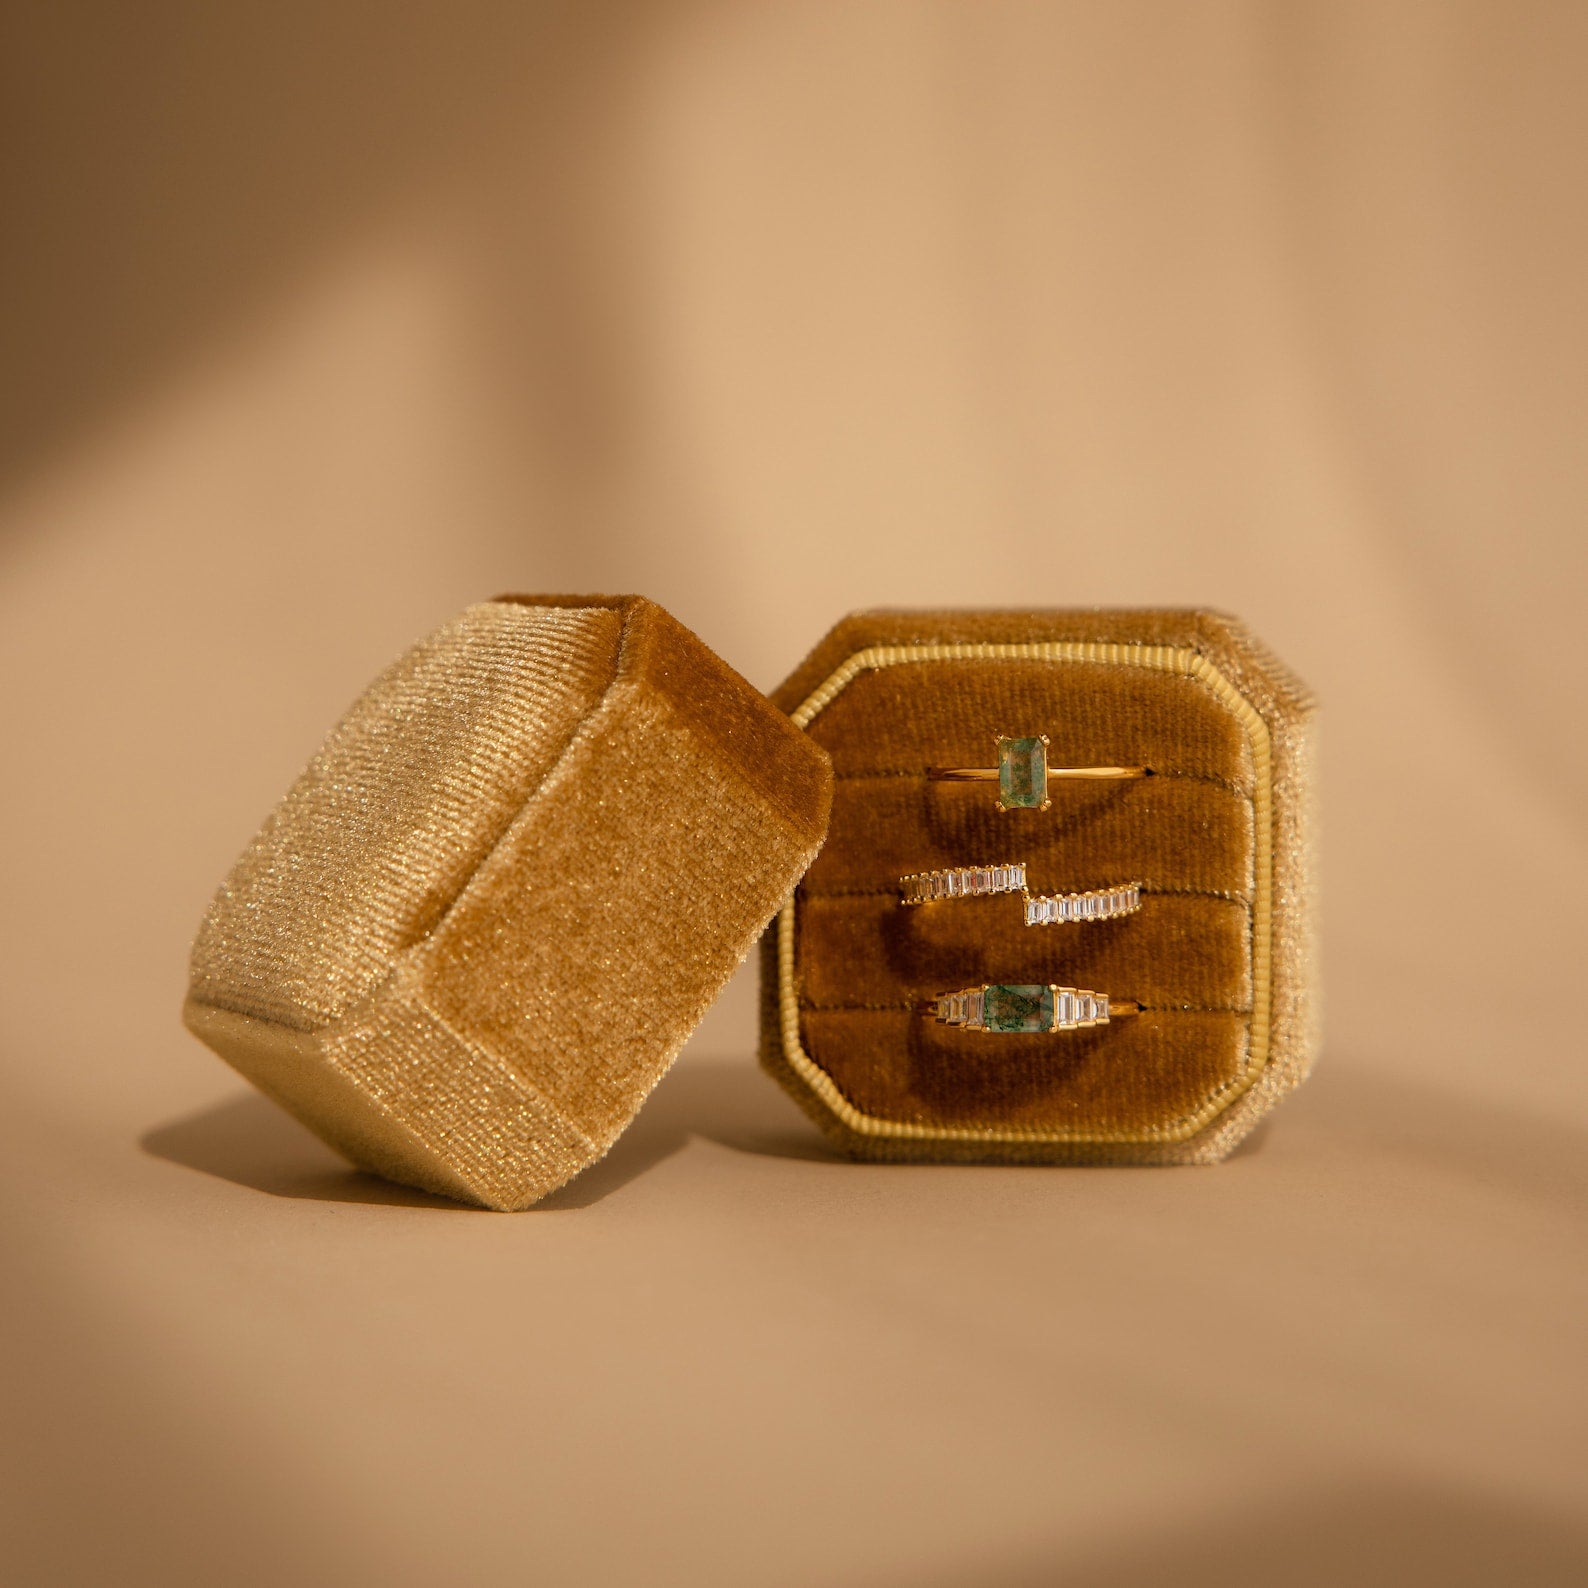 1 Gram Gold Plated With Diamond Latest Design High-quality Ring For Men -  Style B346, सोने का पानी चढ़ी हुई अंगूठी - Soni Fashion, Rajkot | ID:  2851320608873